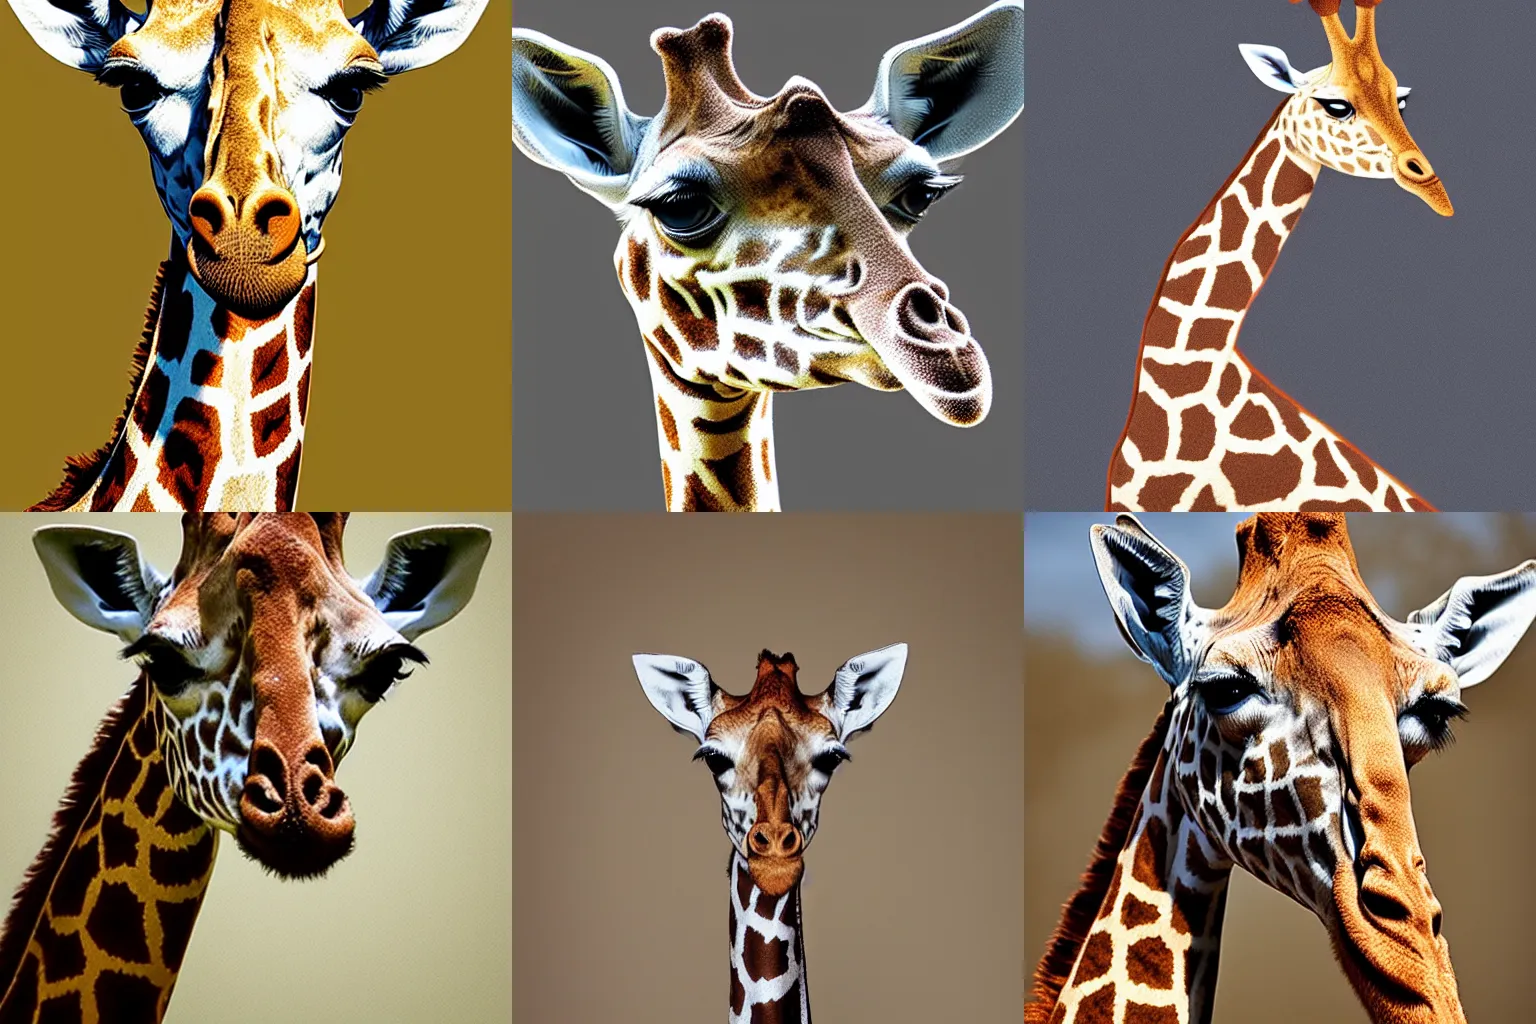 Prompt: anthropomorphic giraffe